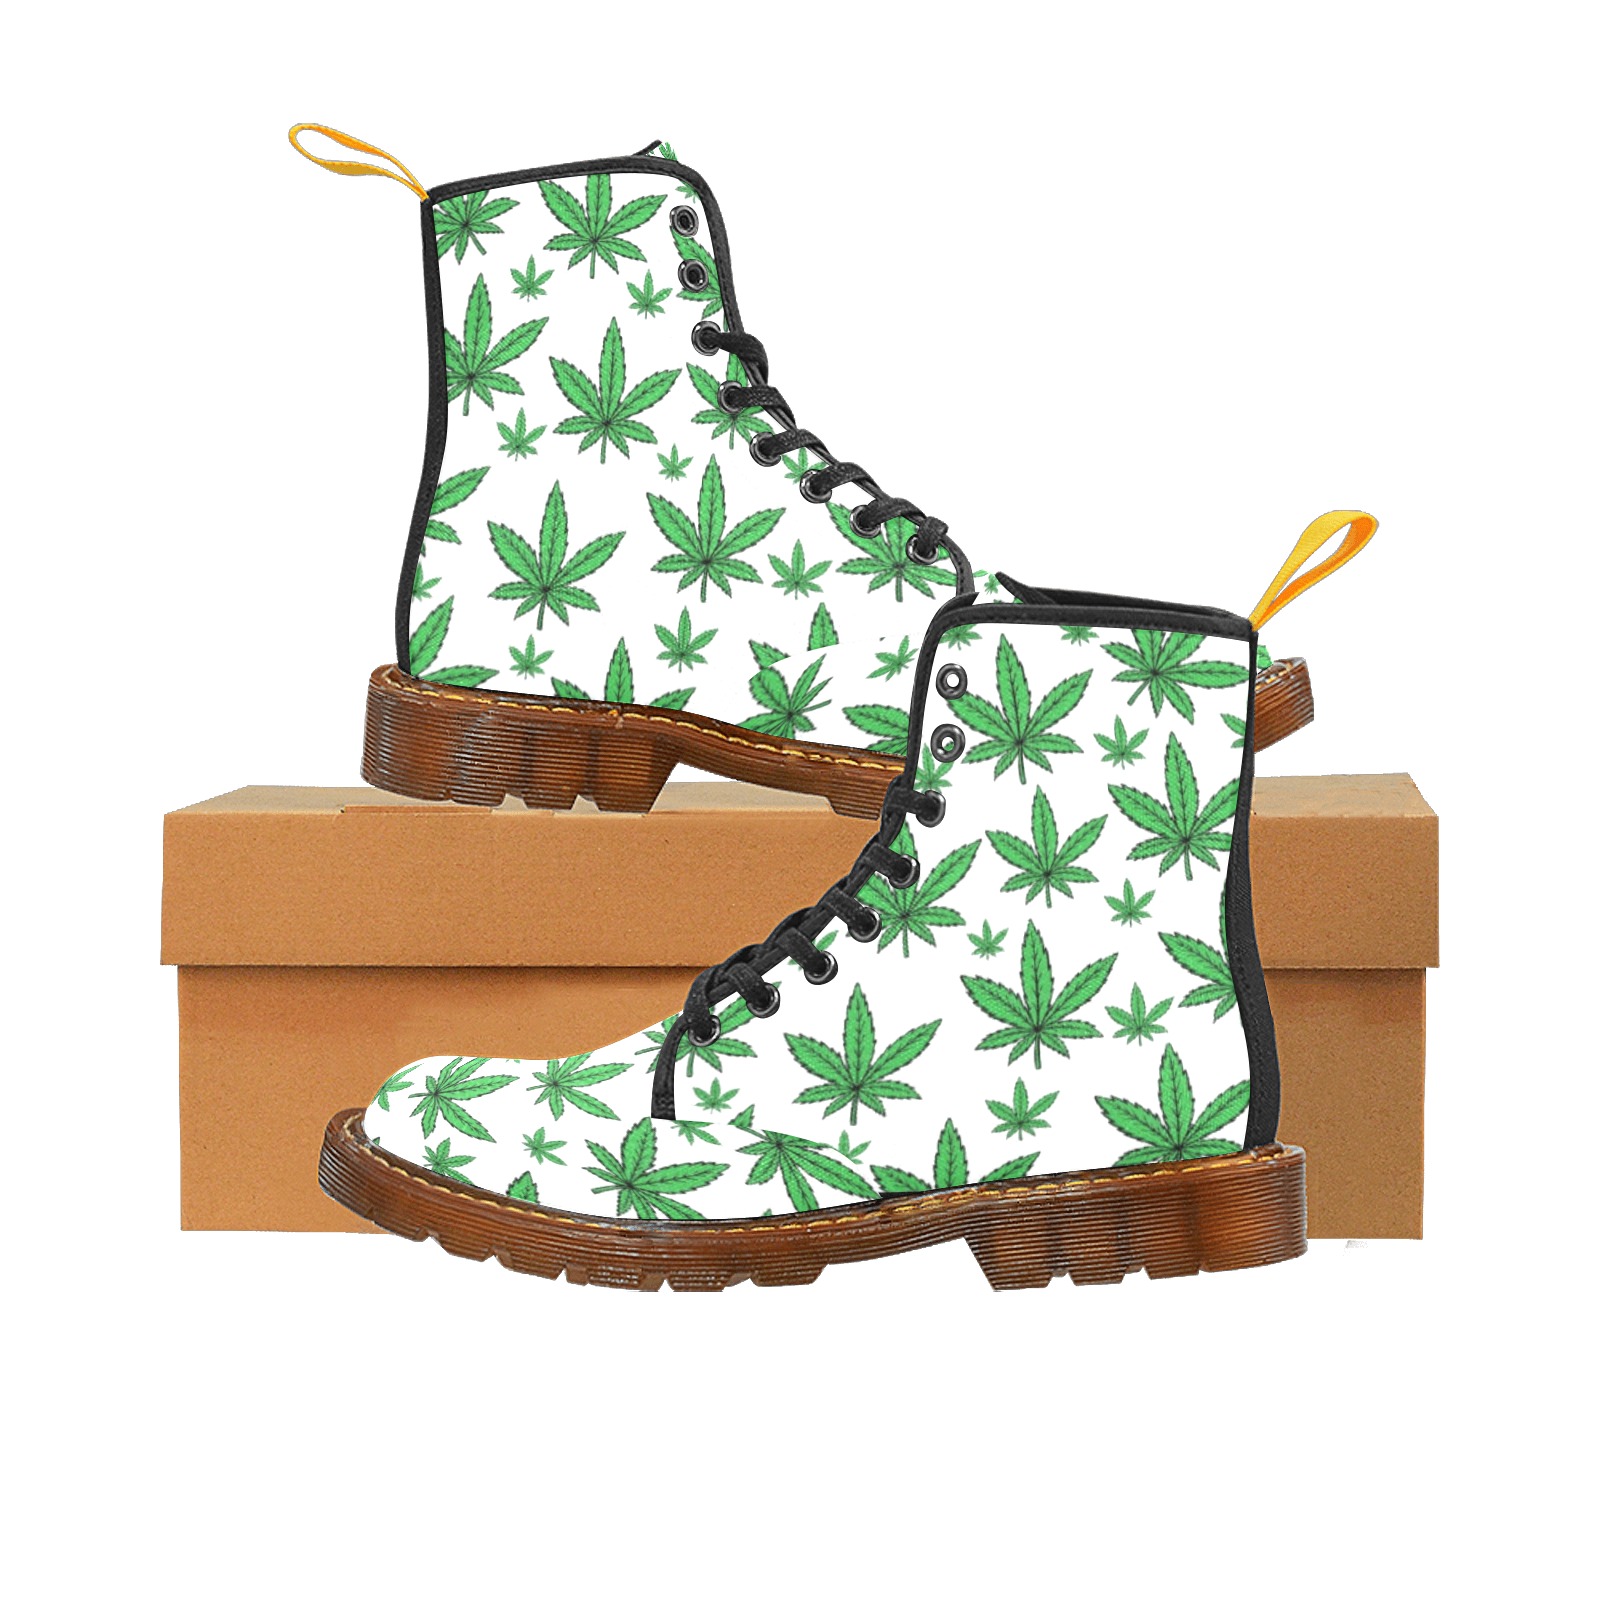 Marijuana Jarful and Marijuana Leaves Martin Boots For Women Model 1203H